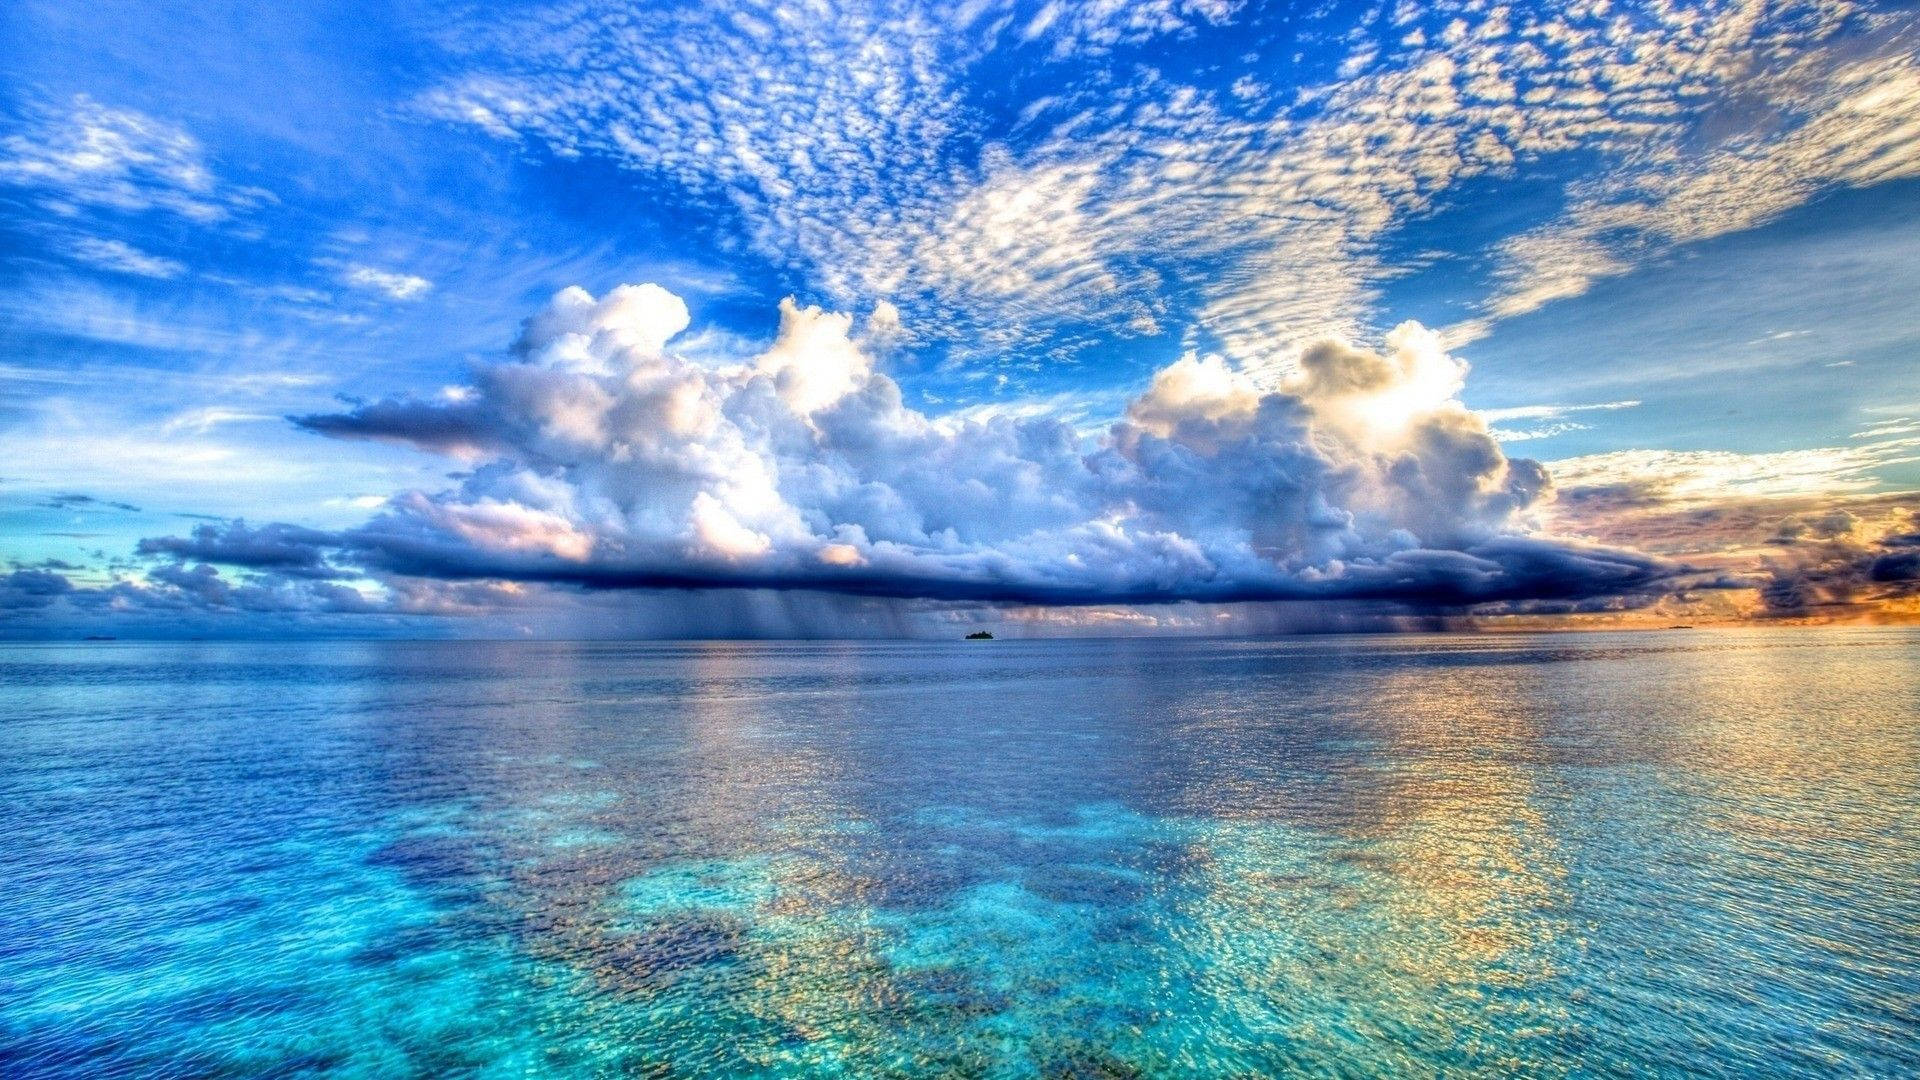 Aesthetic Ocean And Cloudy Sky